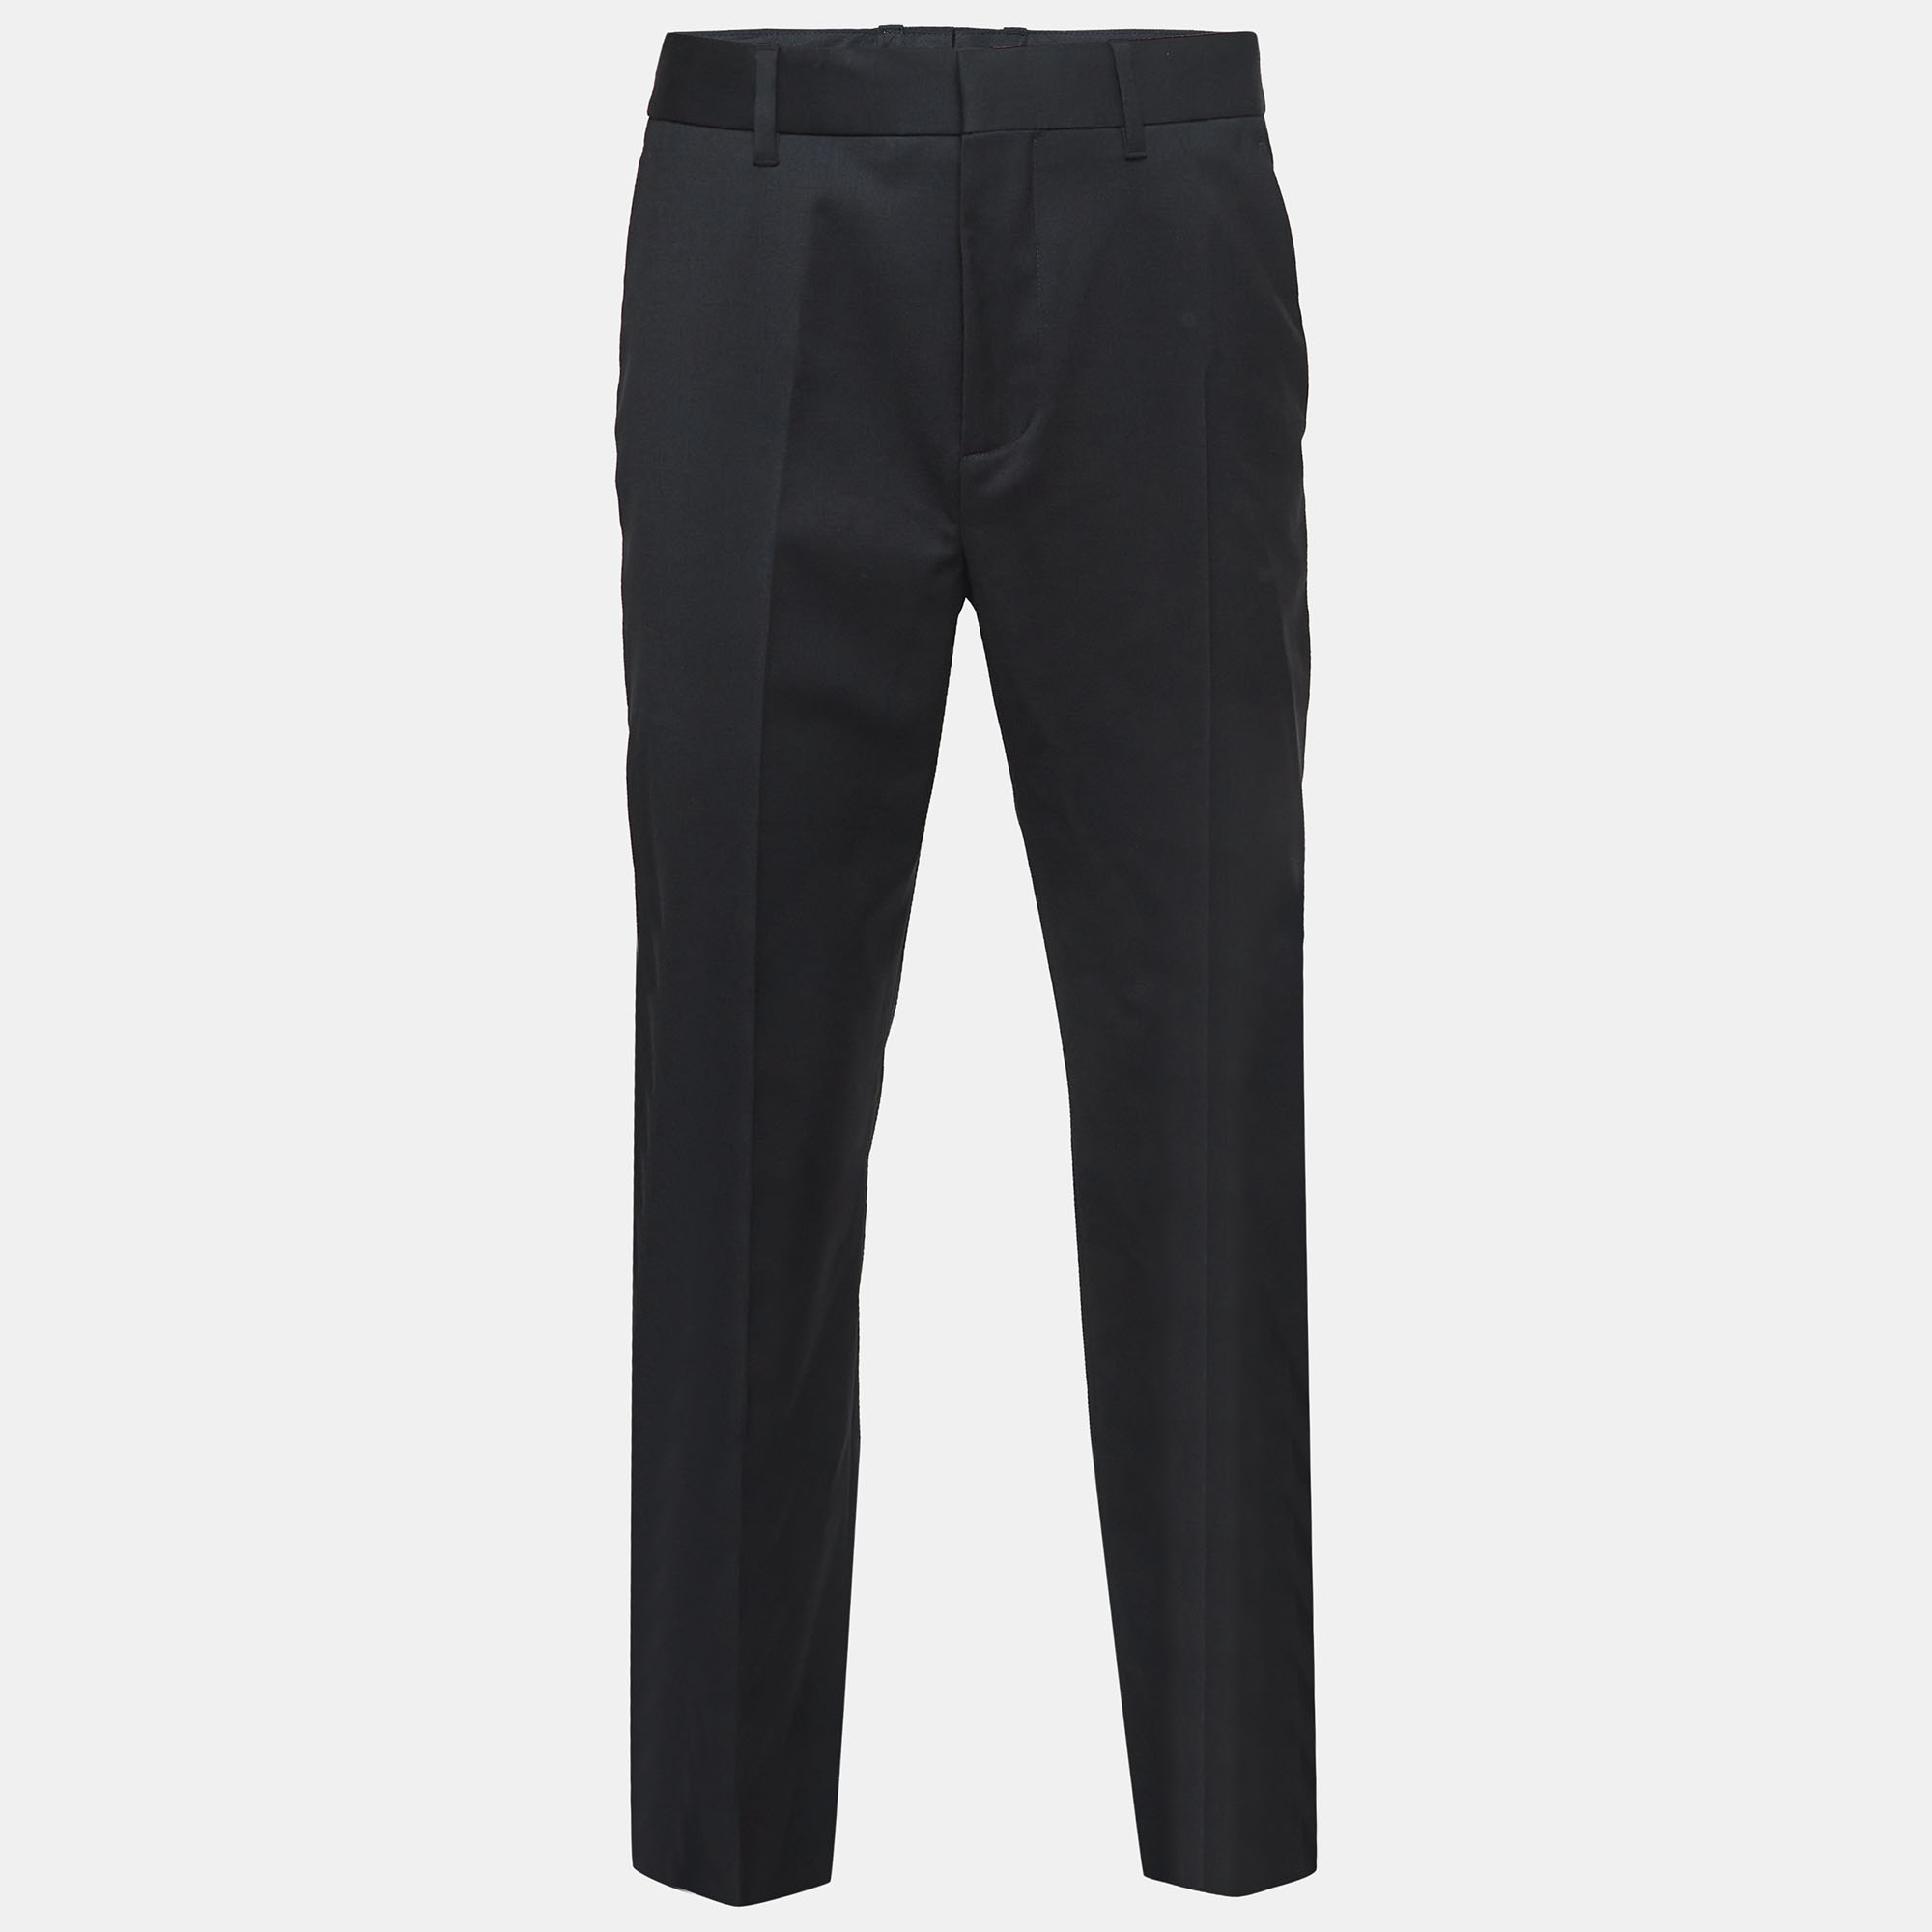 Fendi black wool-blend trousers l